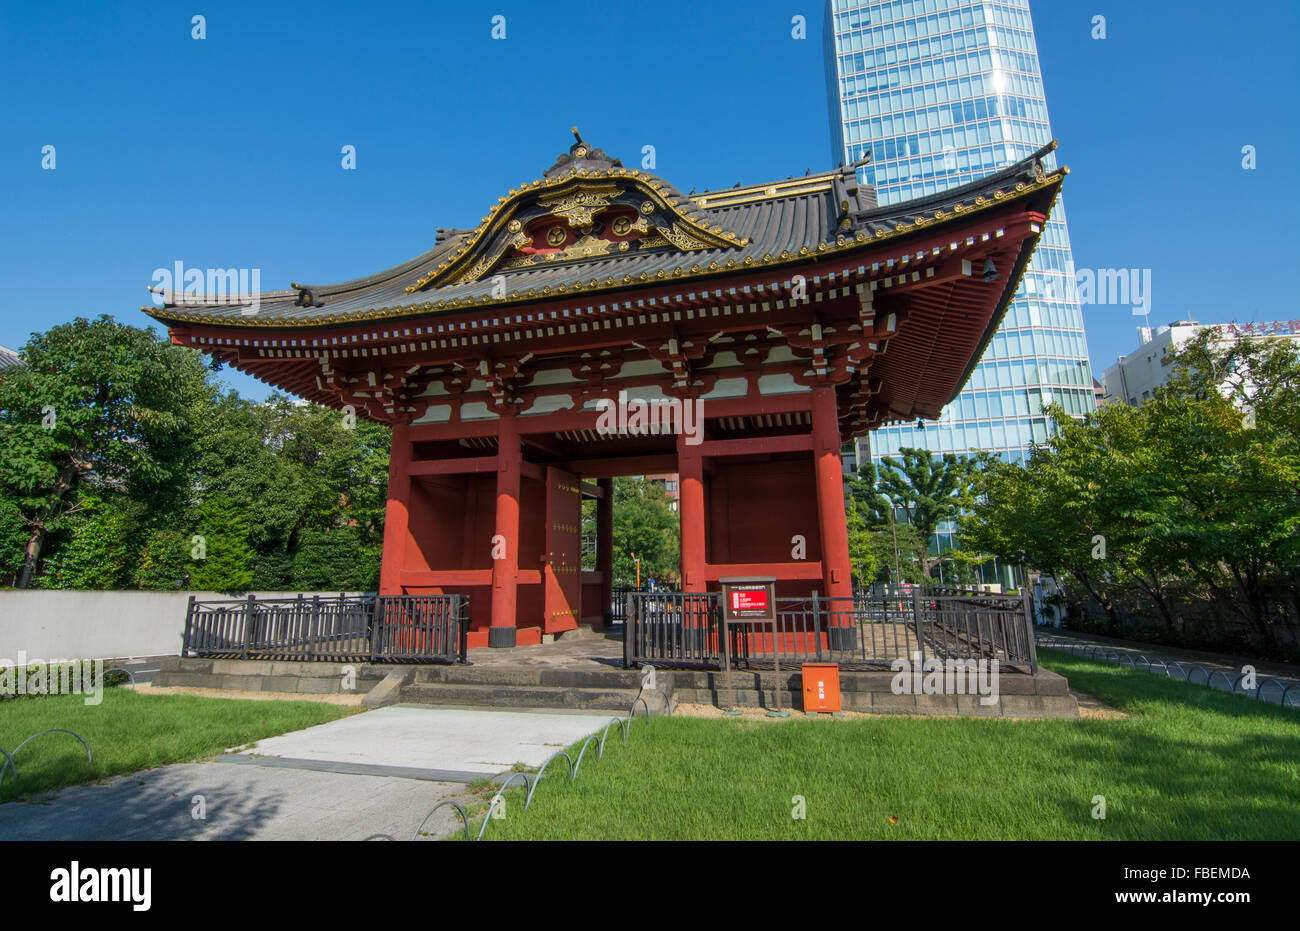 Tokyo monument